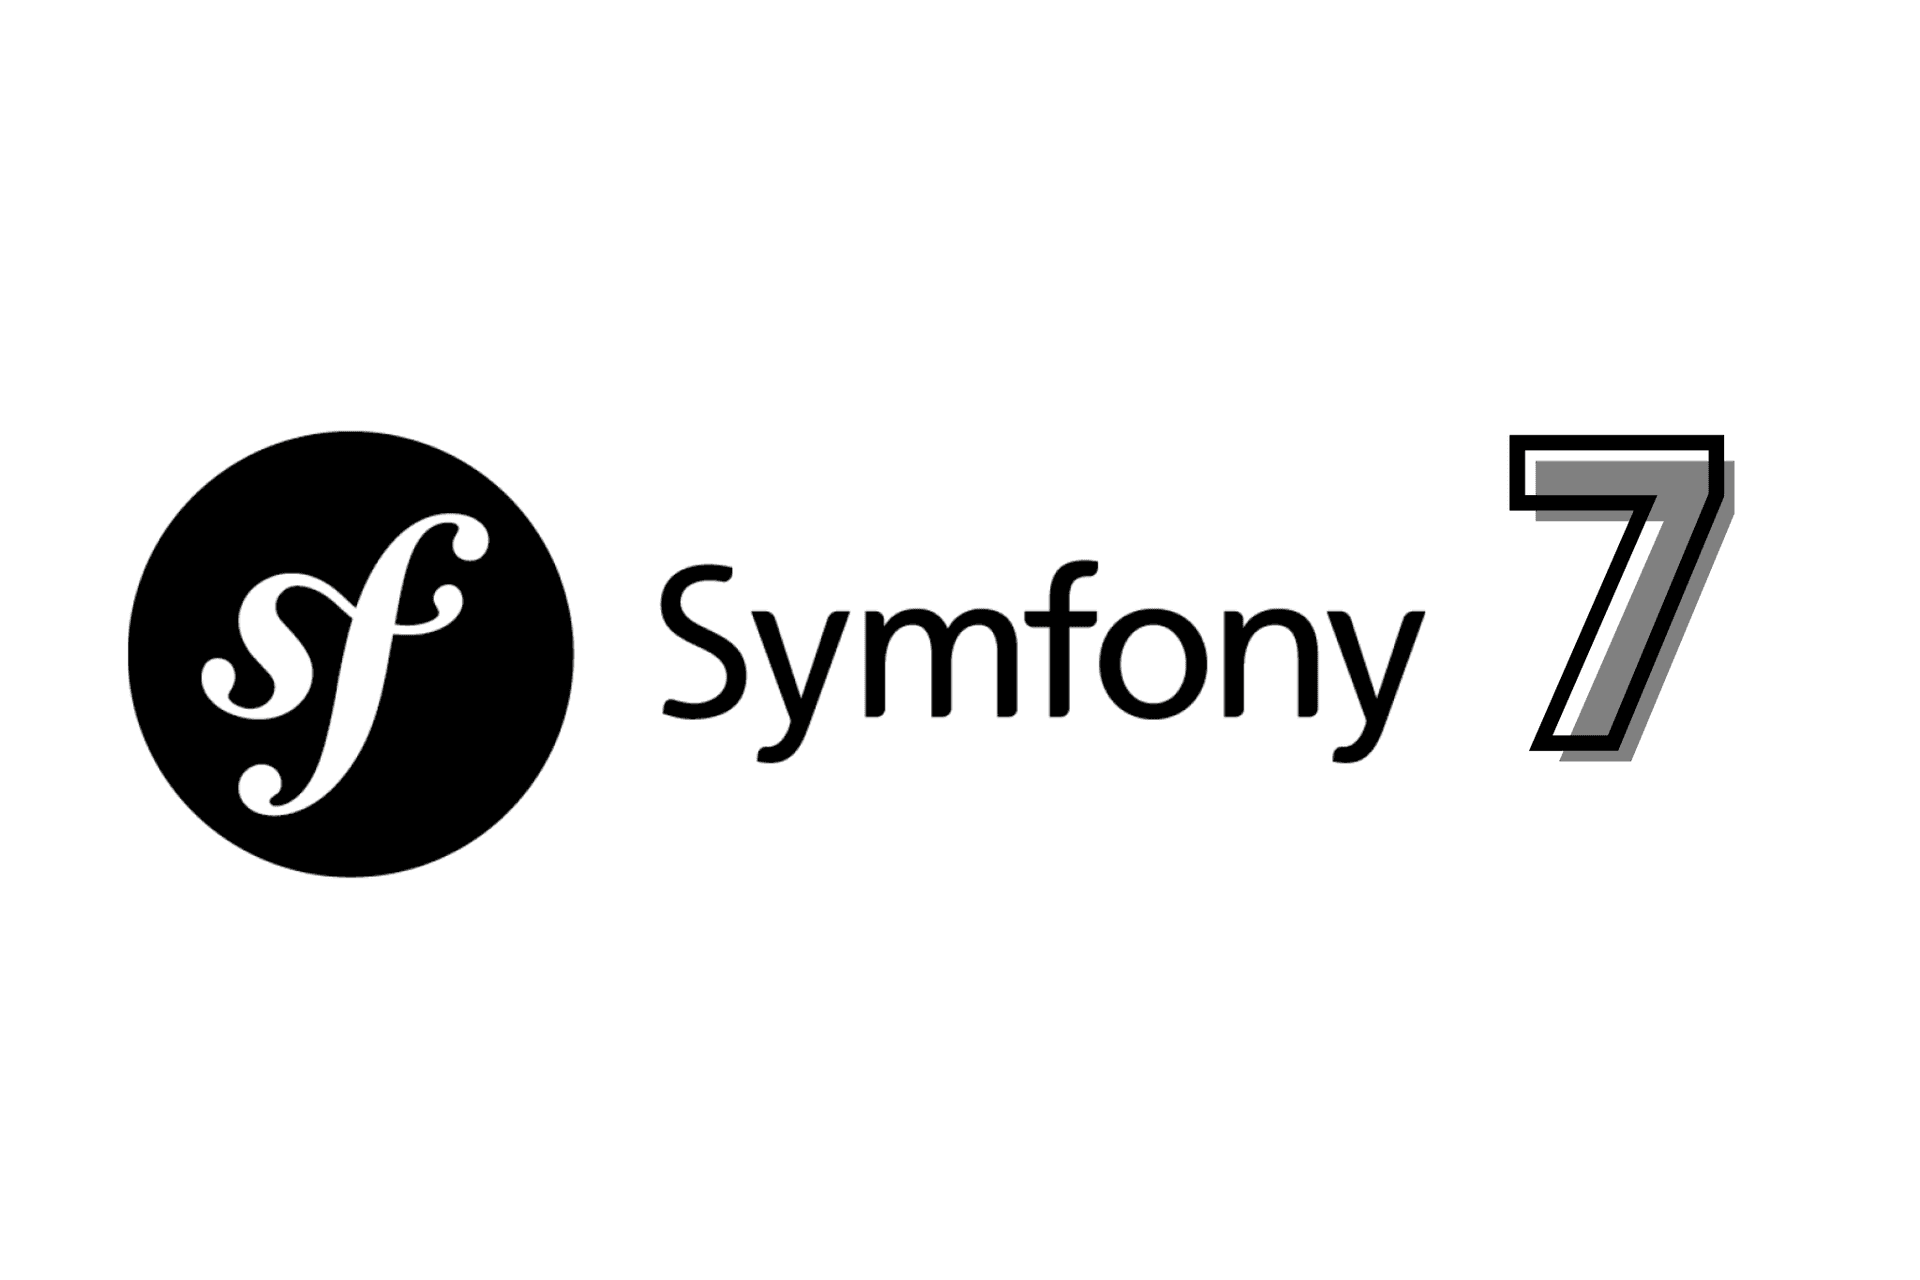 Les changements de Symfony 7